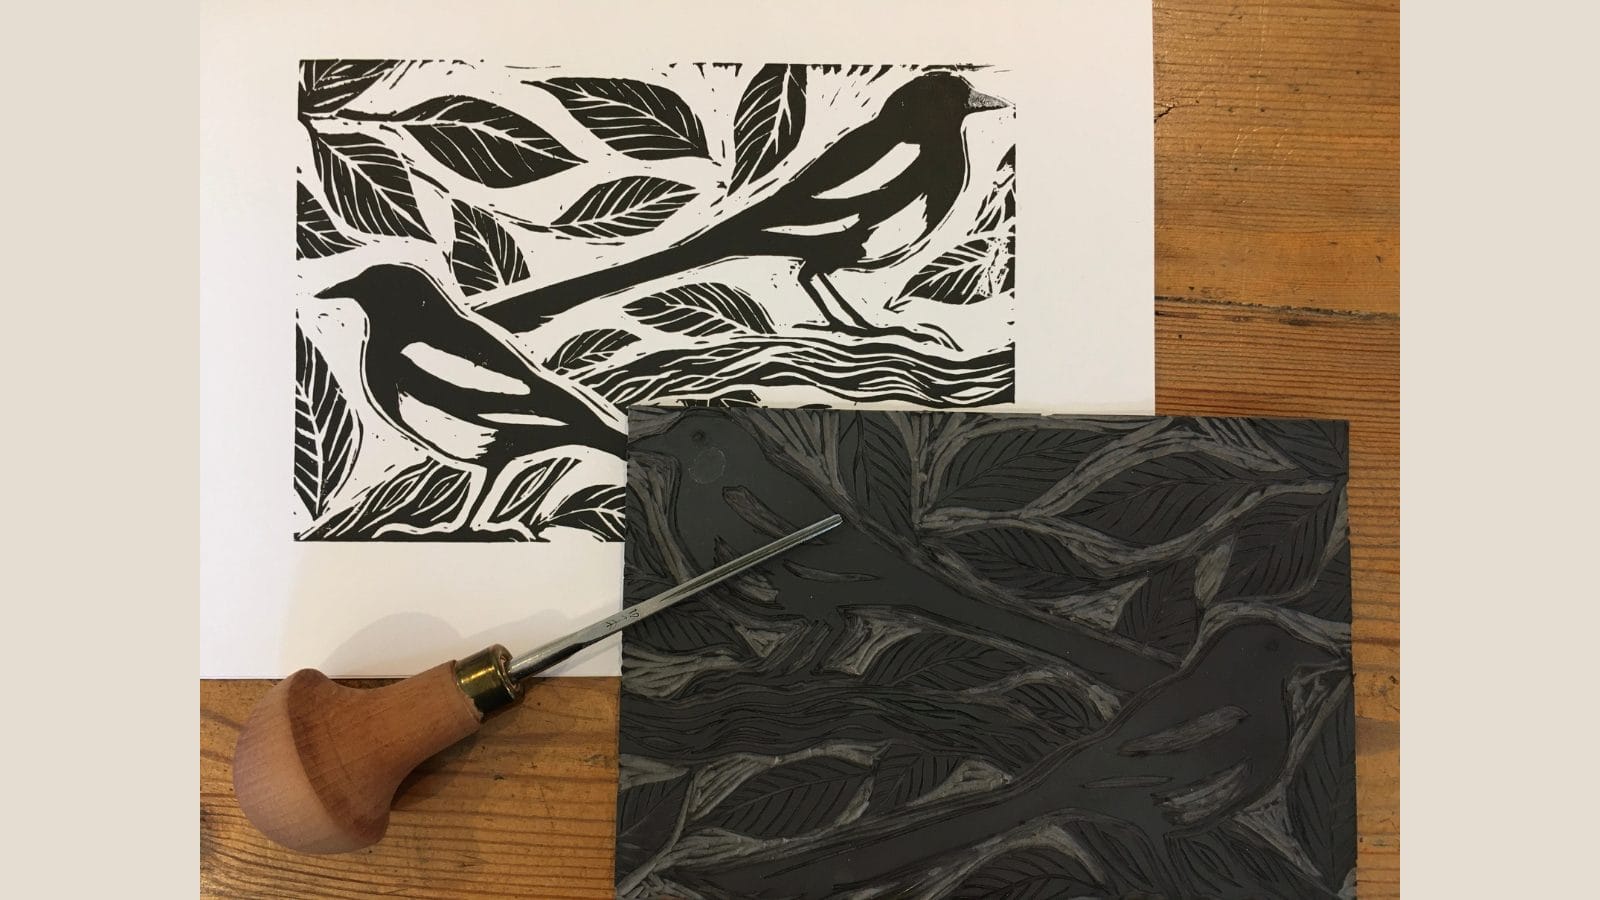 A black lino print of a bird